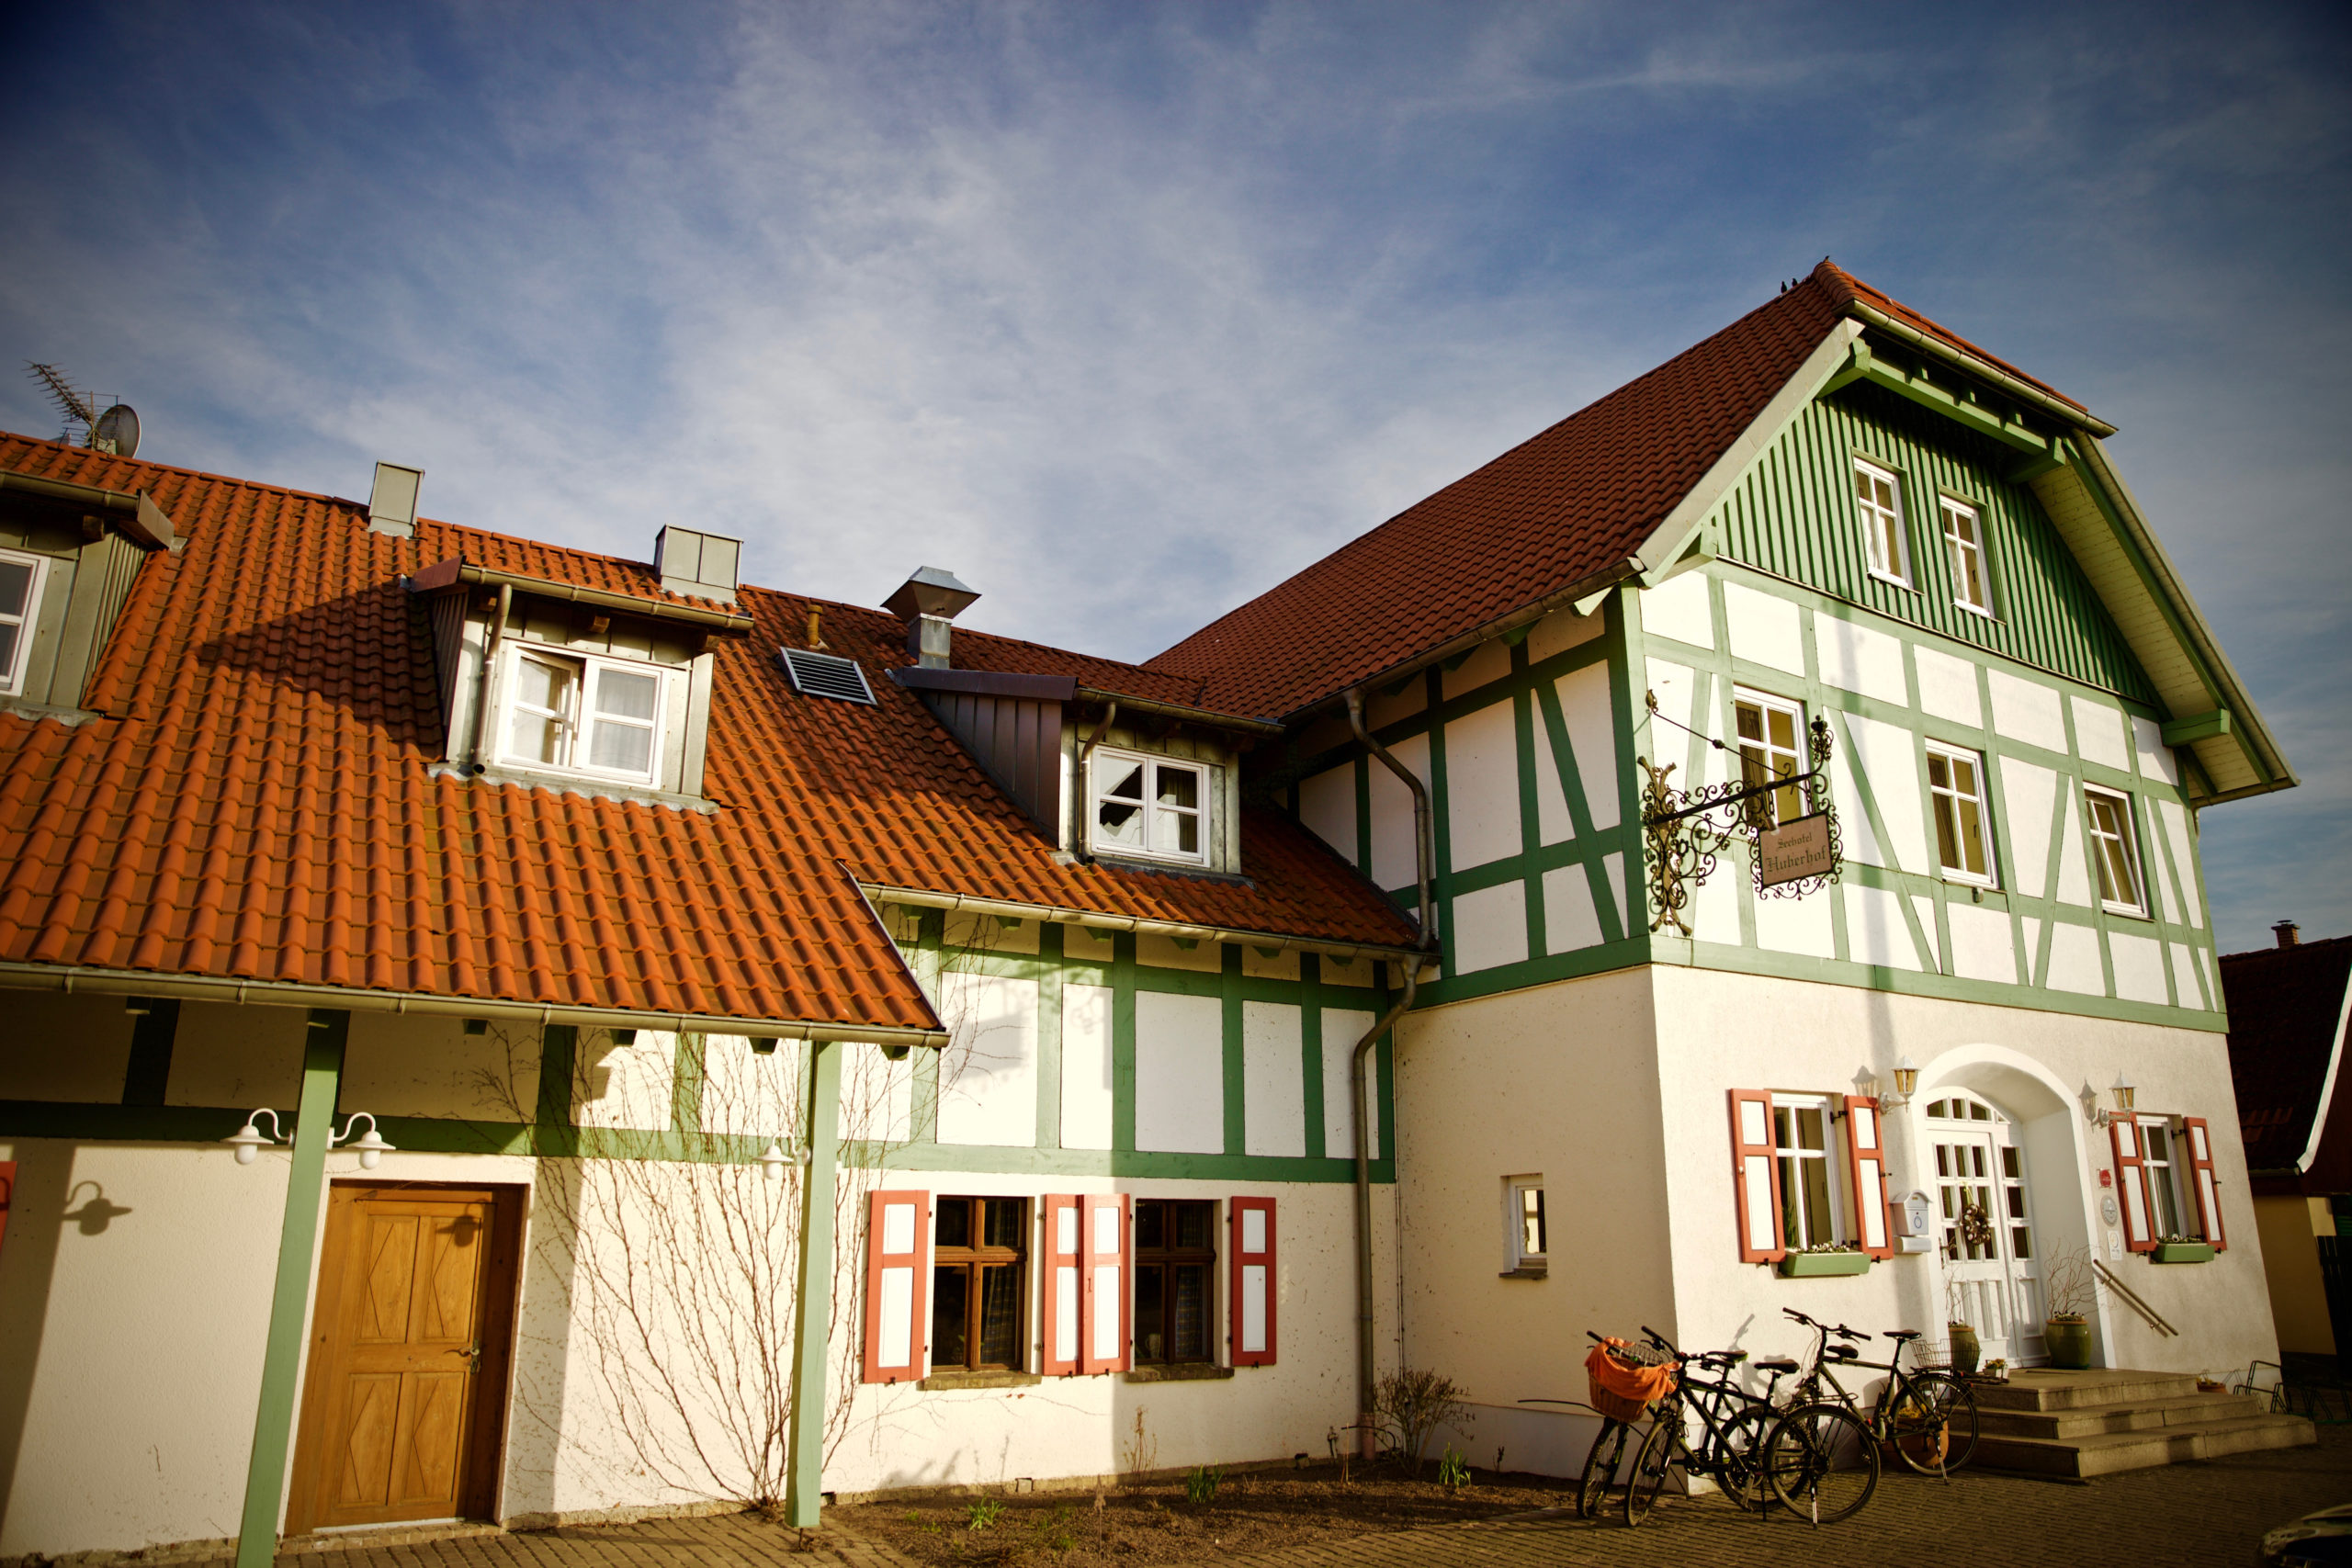 Restaurants in der Uckermark: Seehotel Huberhof